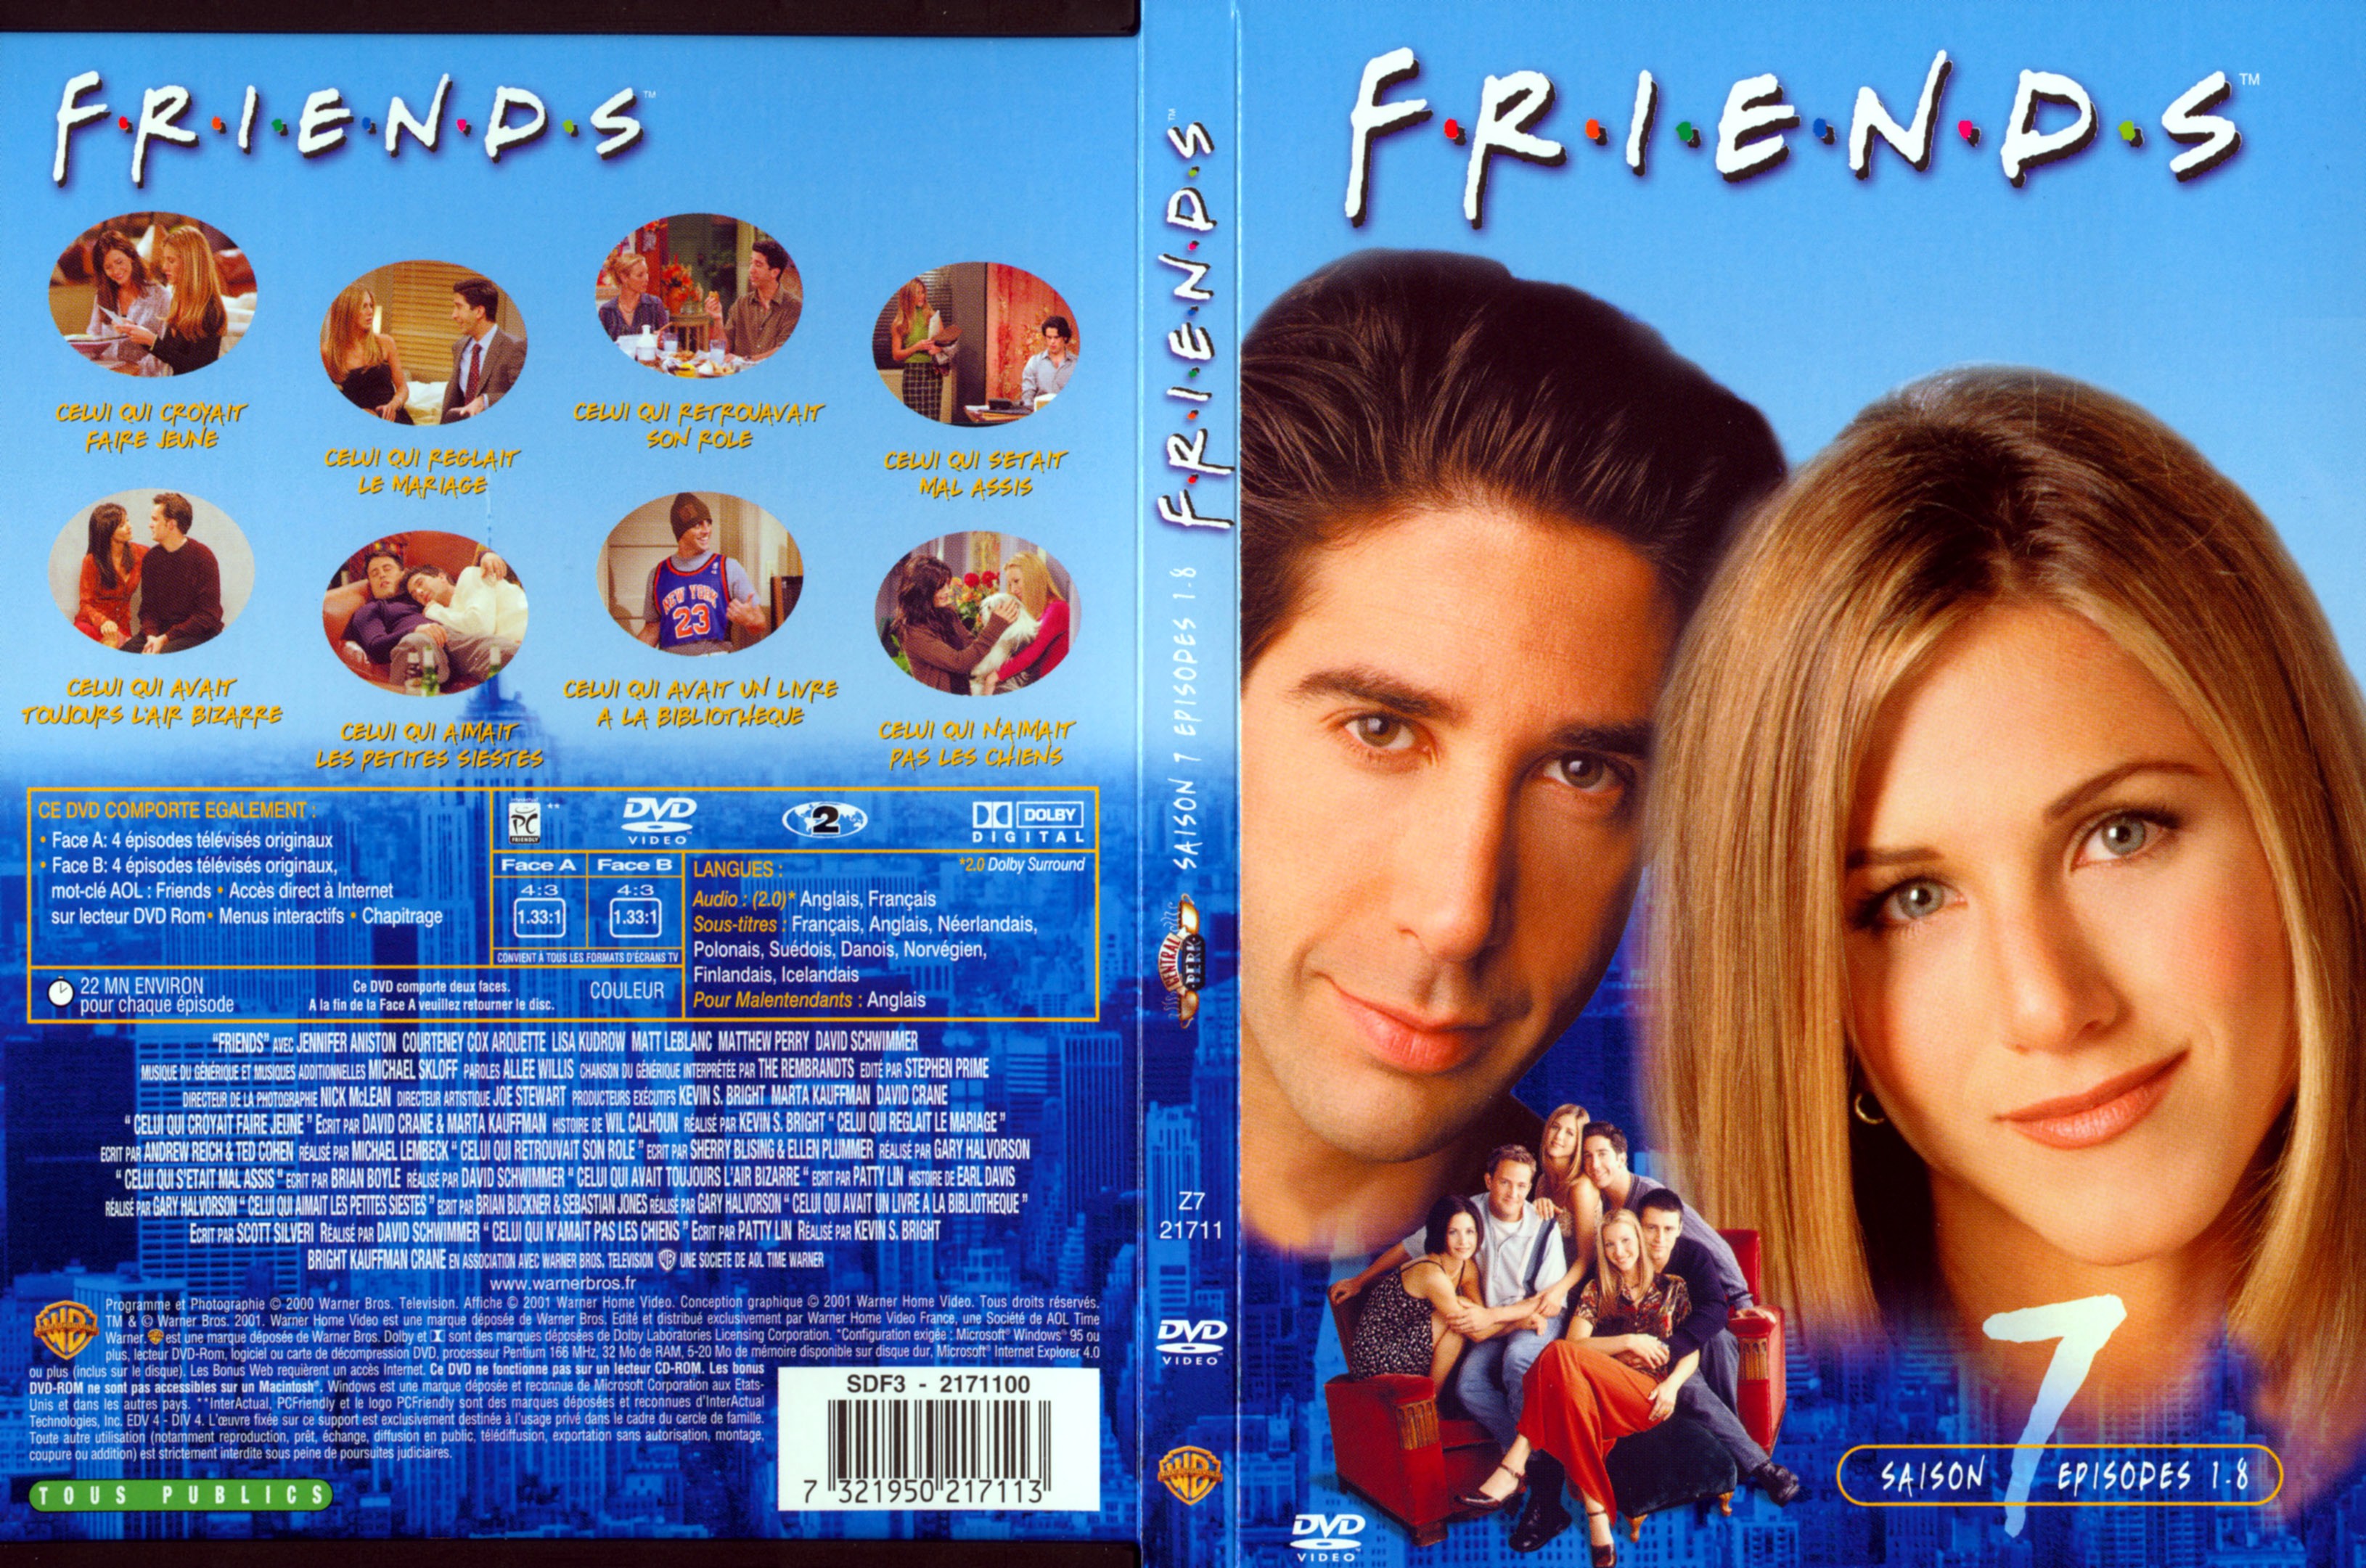 Jaquette DVD Friends saison 7 dvd 1